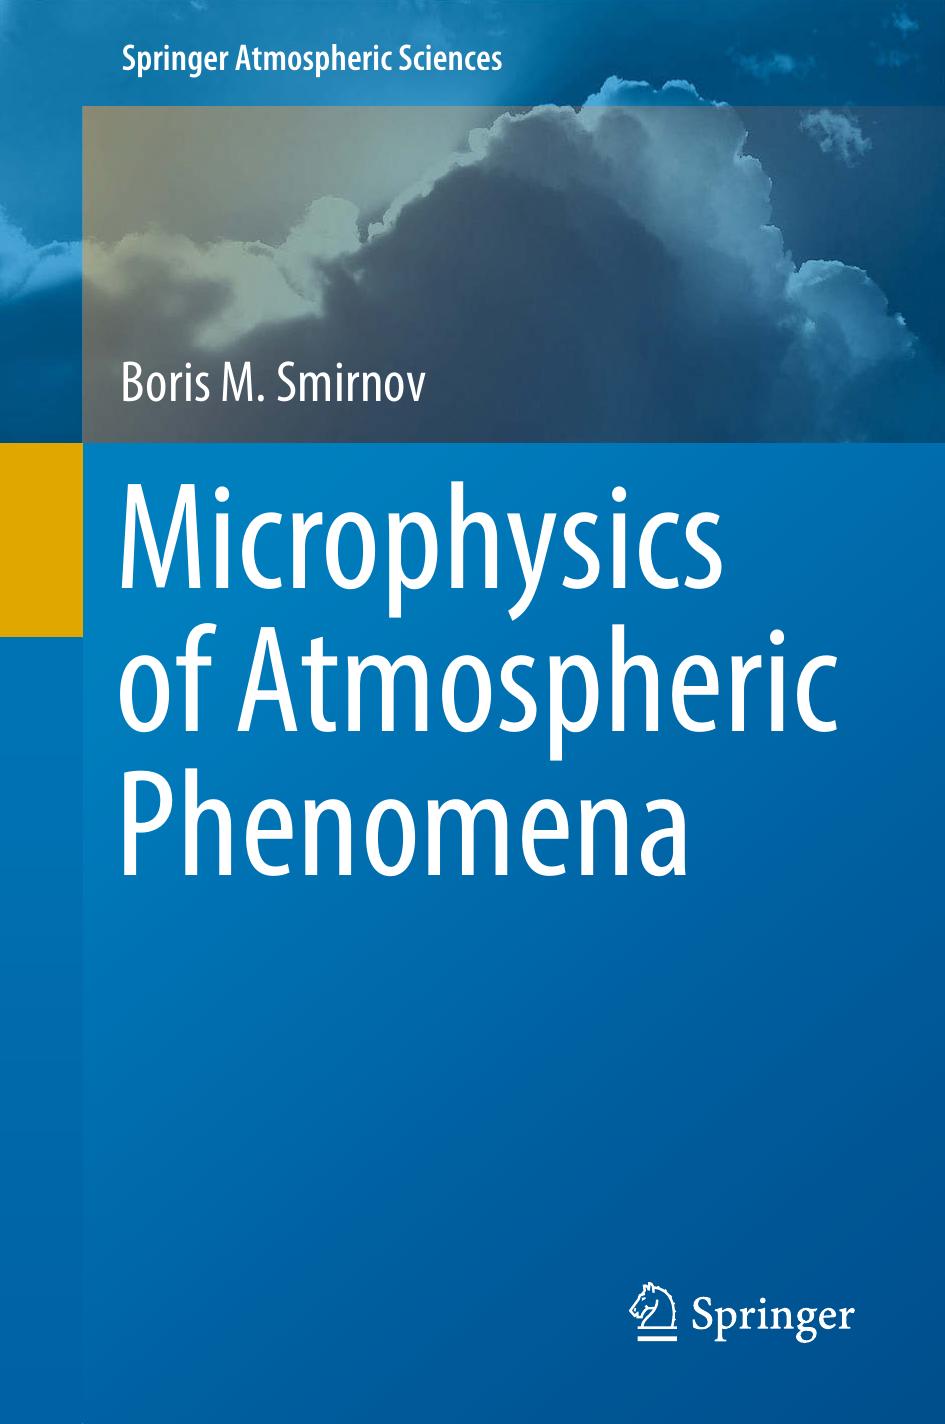 Microphysics of Atmospheric Phenomena 2017 ( PDFDrive.com )